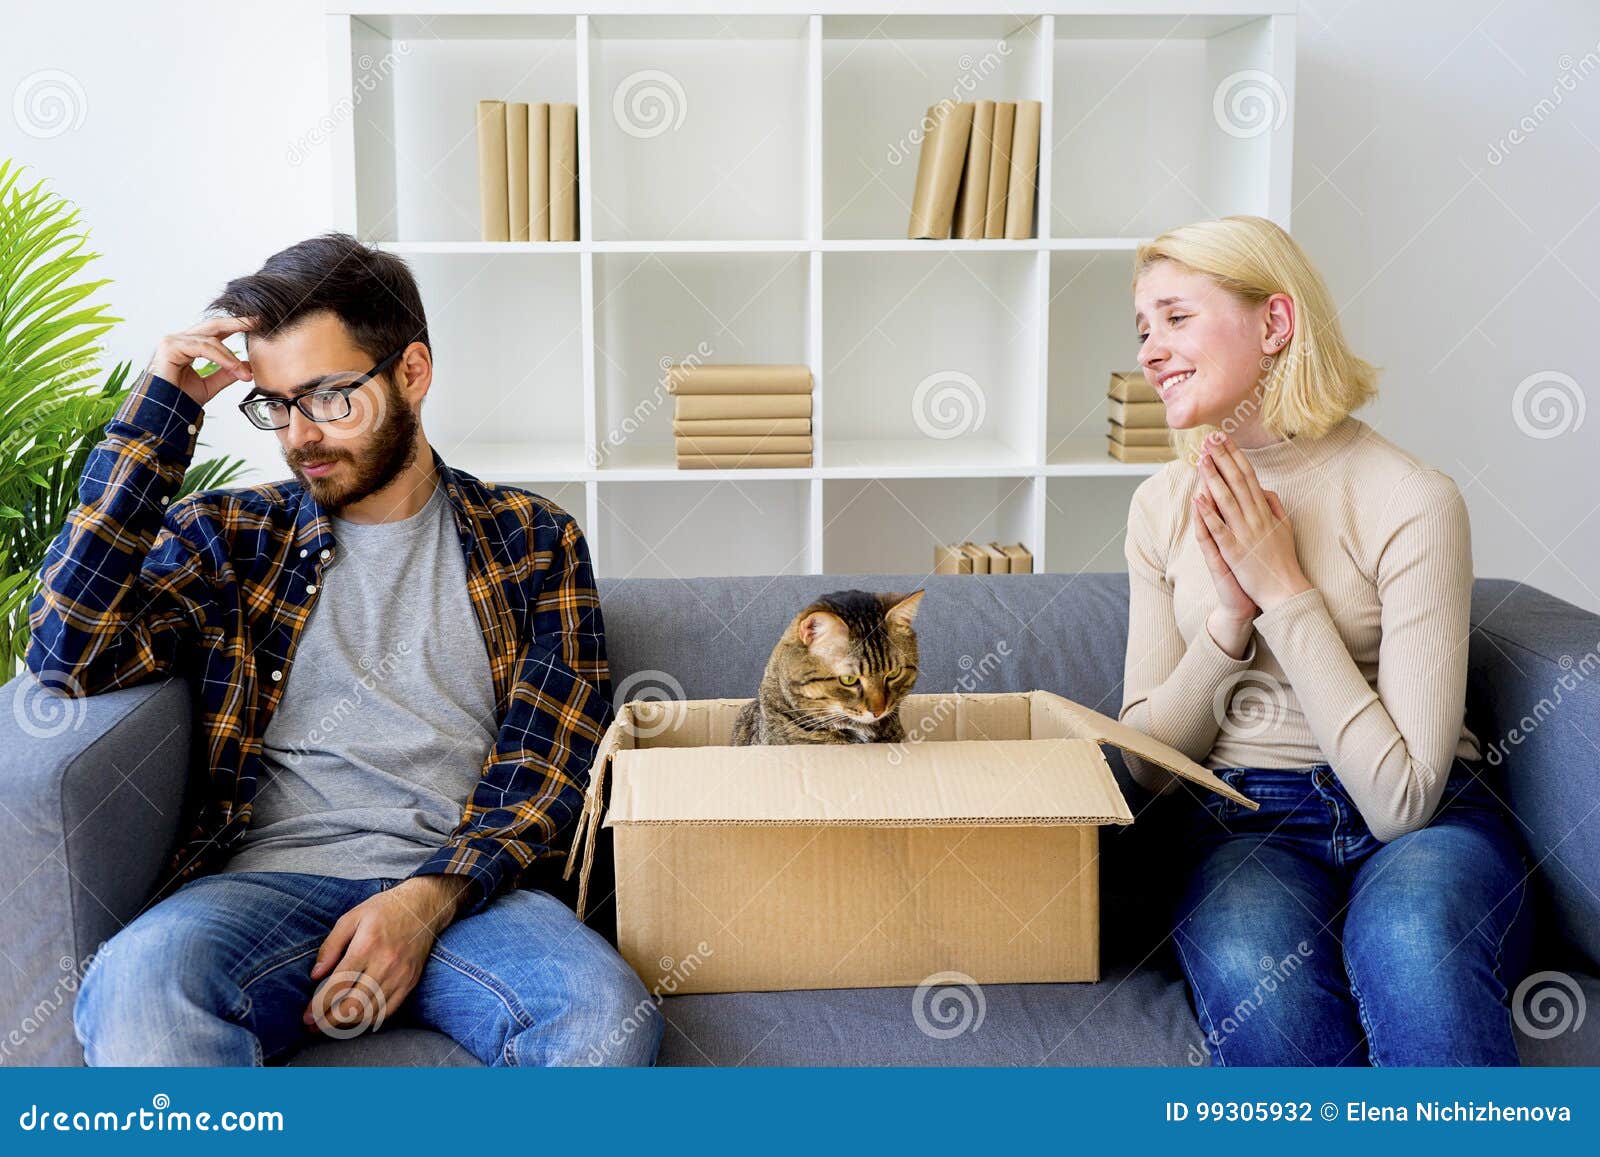 Кошка муж кошка жена. Фотосессия муж жена кот. Муж жена и кошка. Котики муж и жена. Коты супруги.